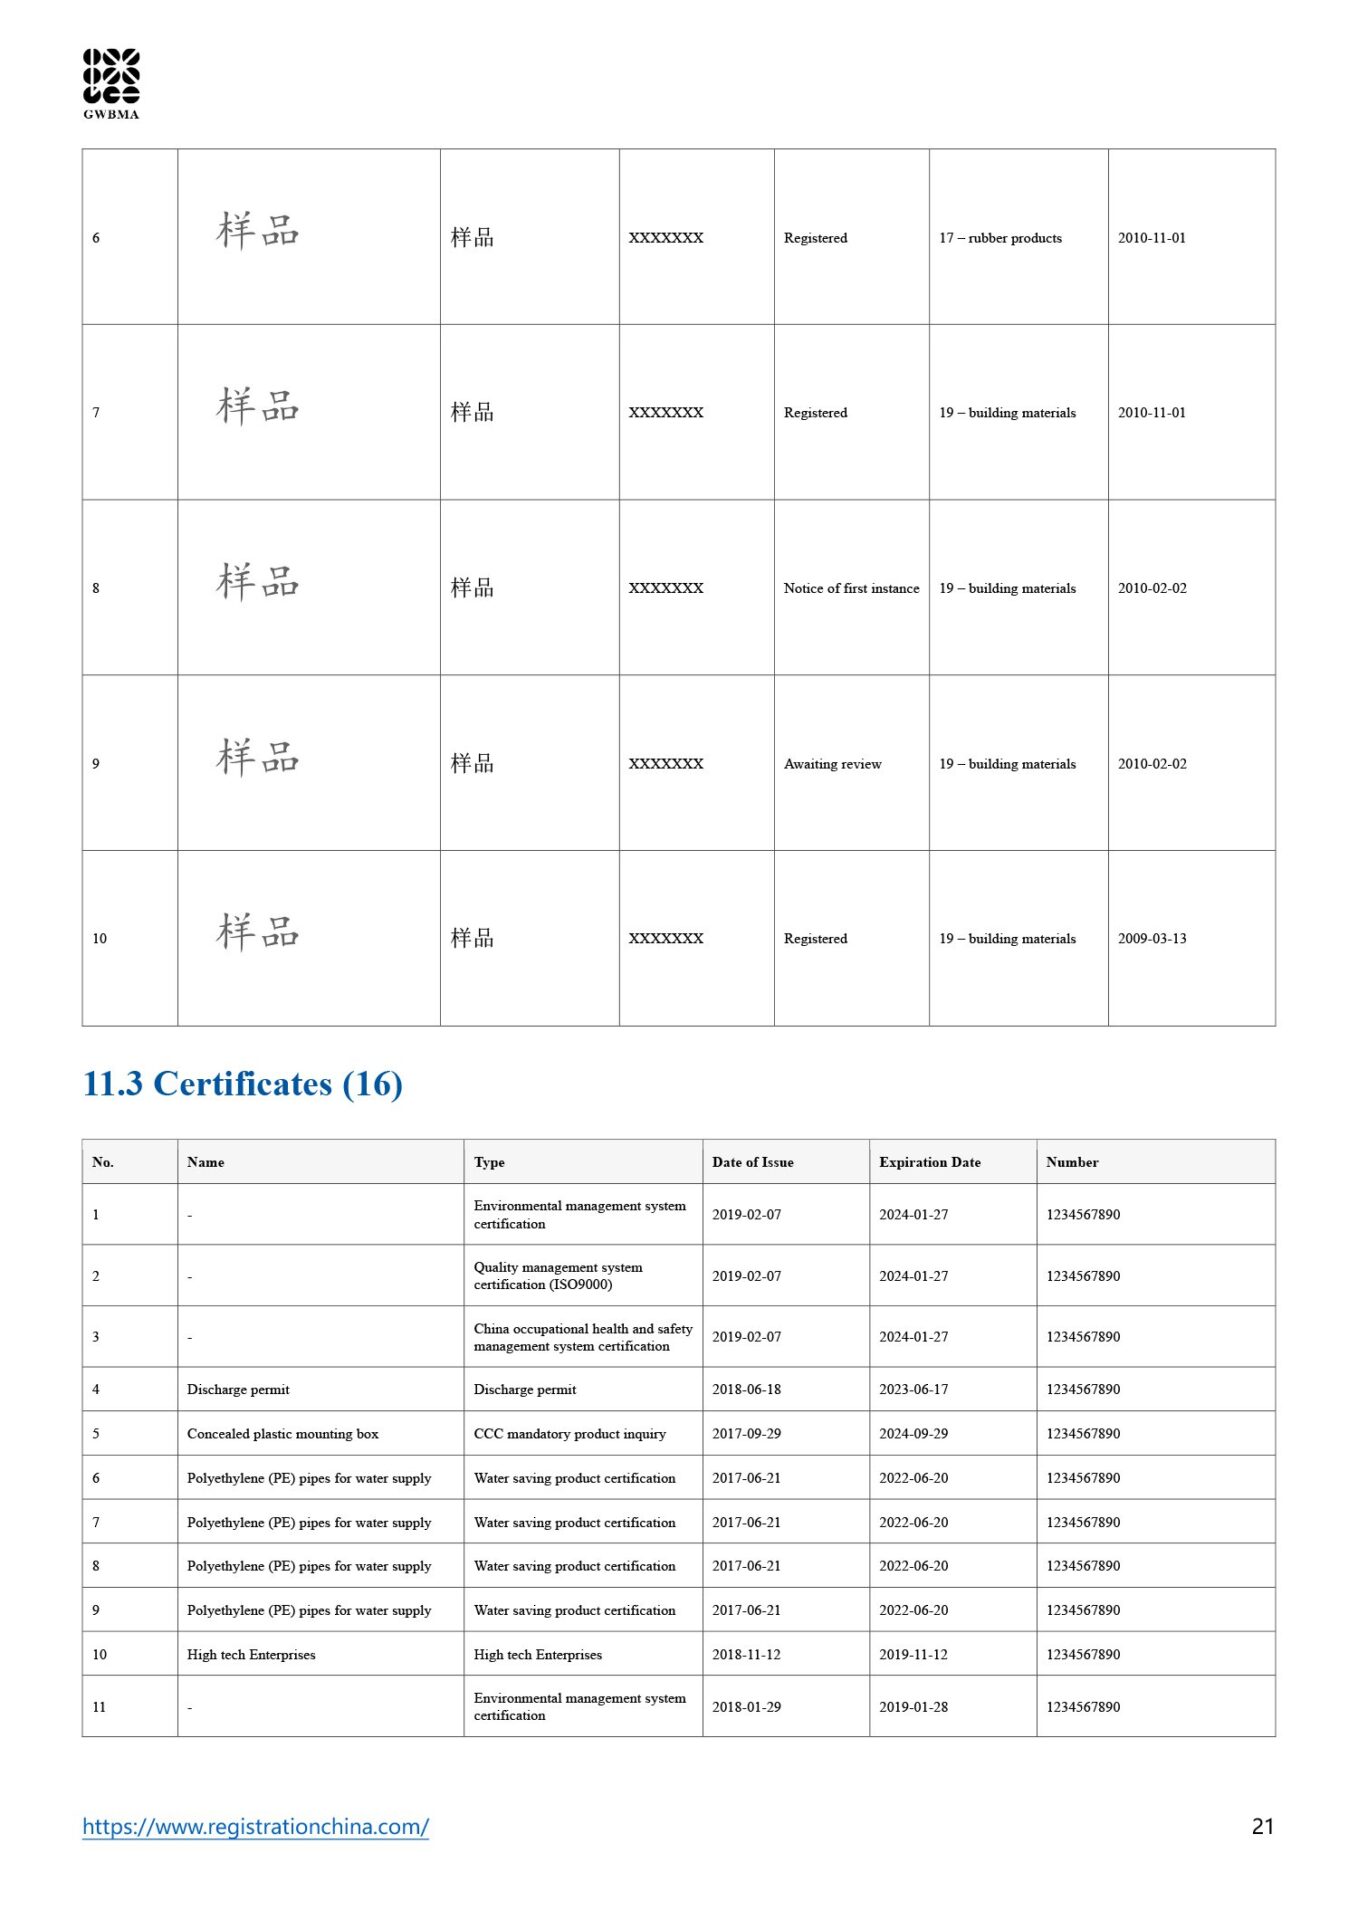 China Comprehensive Corporation Verification Report (21)